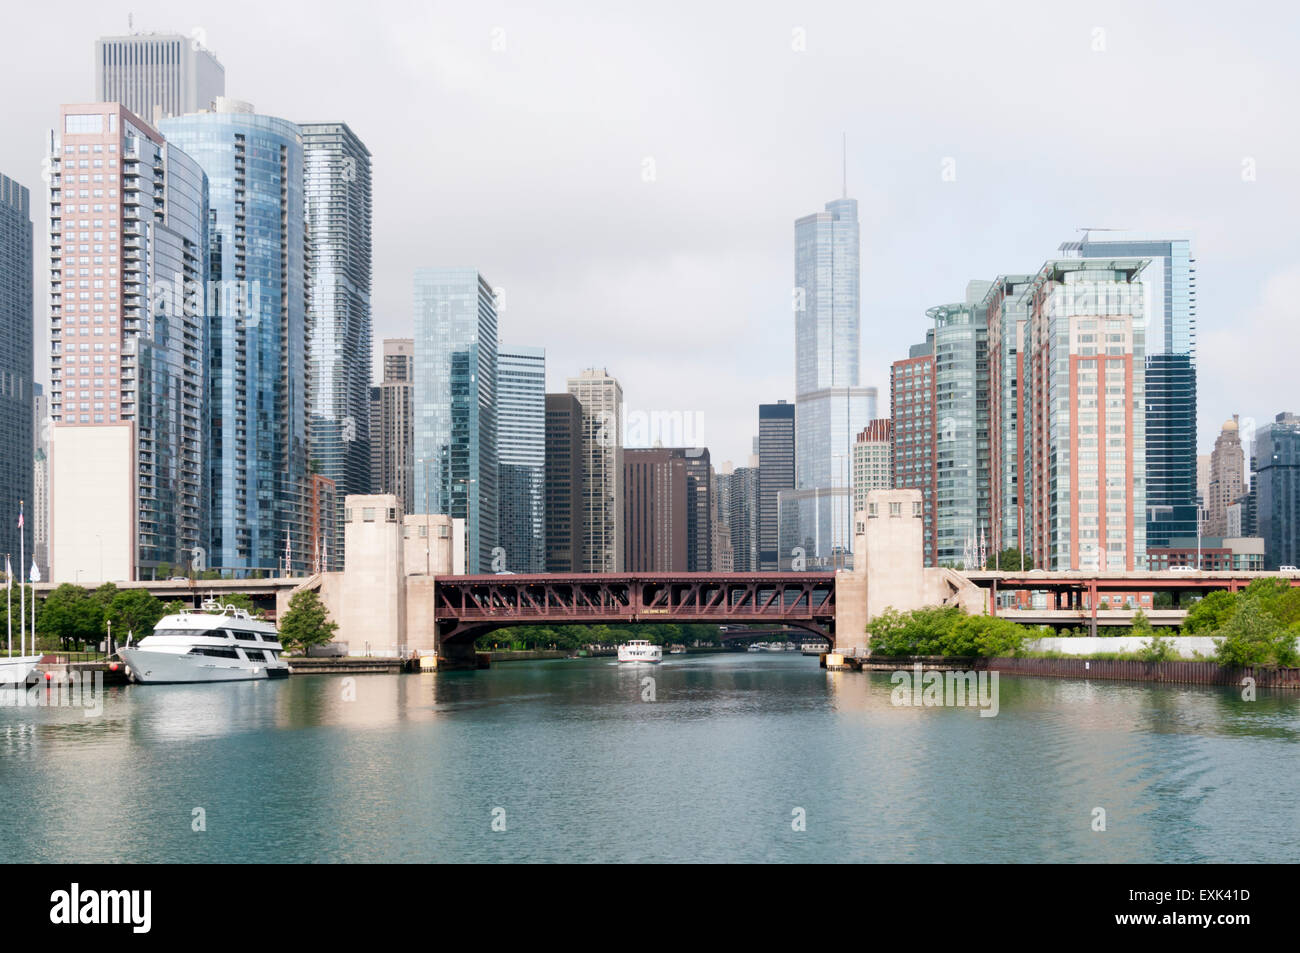 Blick auf Hochhäuser entlang des Chicago River Lake Shore Drive Doppelstock-Bascule Outer Drive Brücke kreuzt. Stockfoto